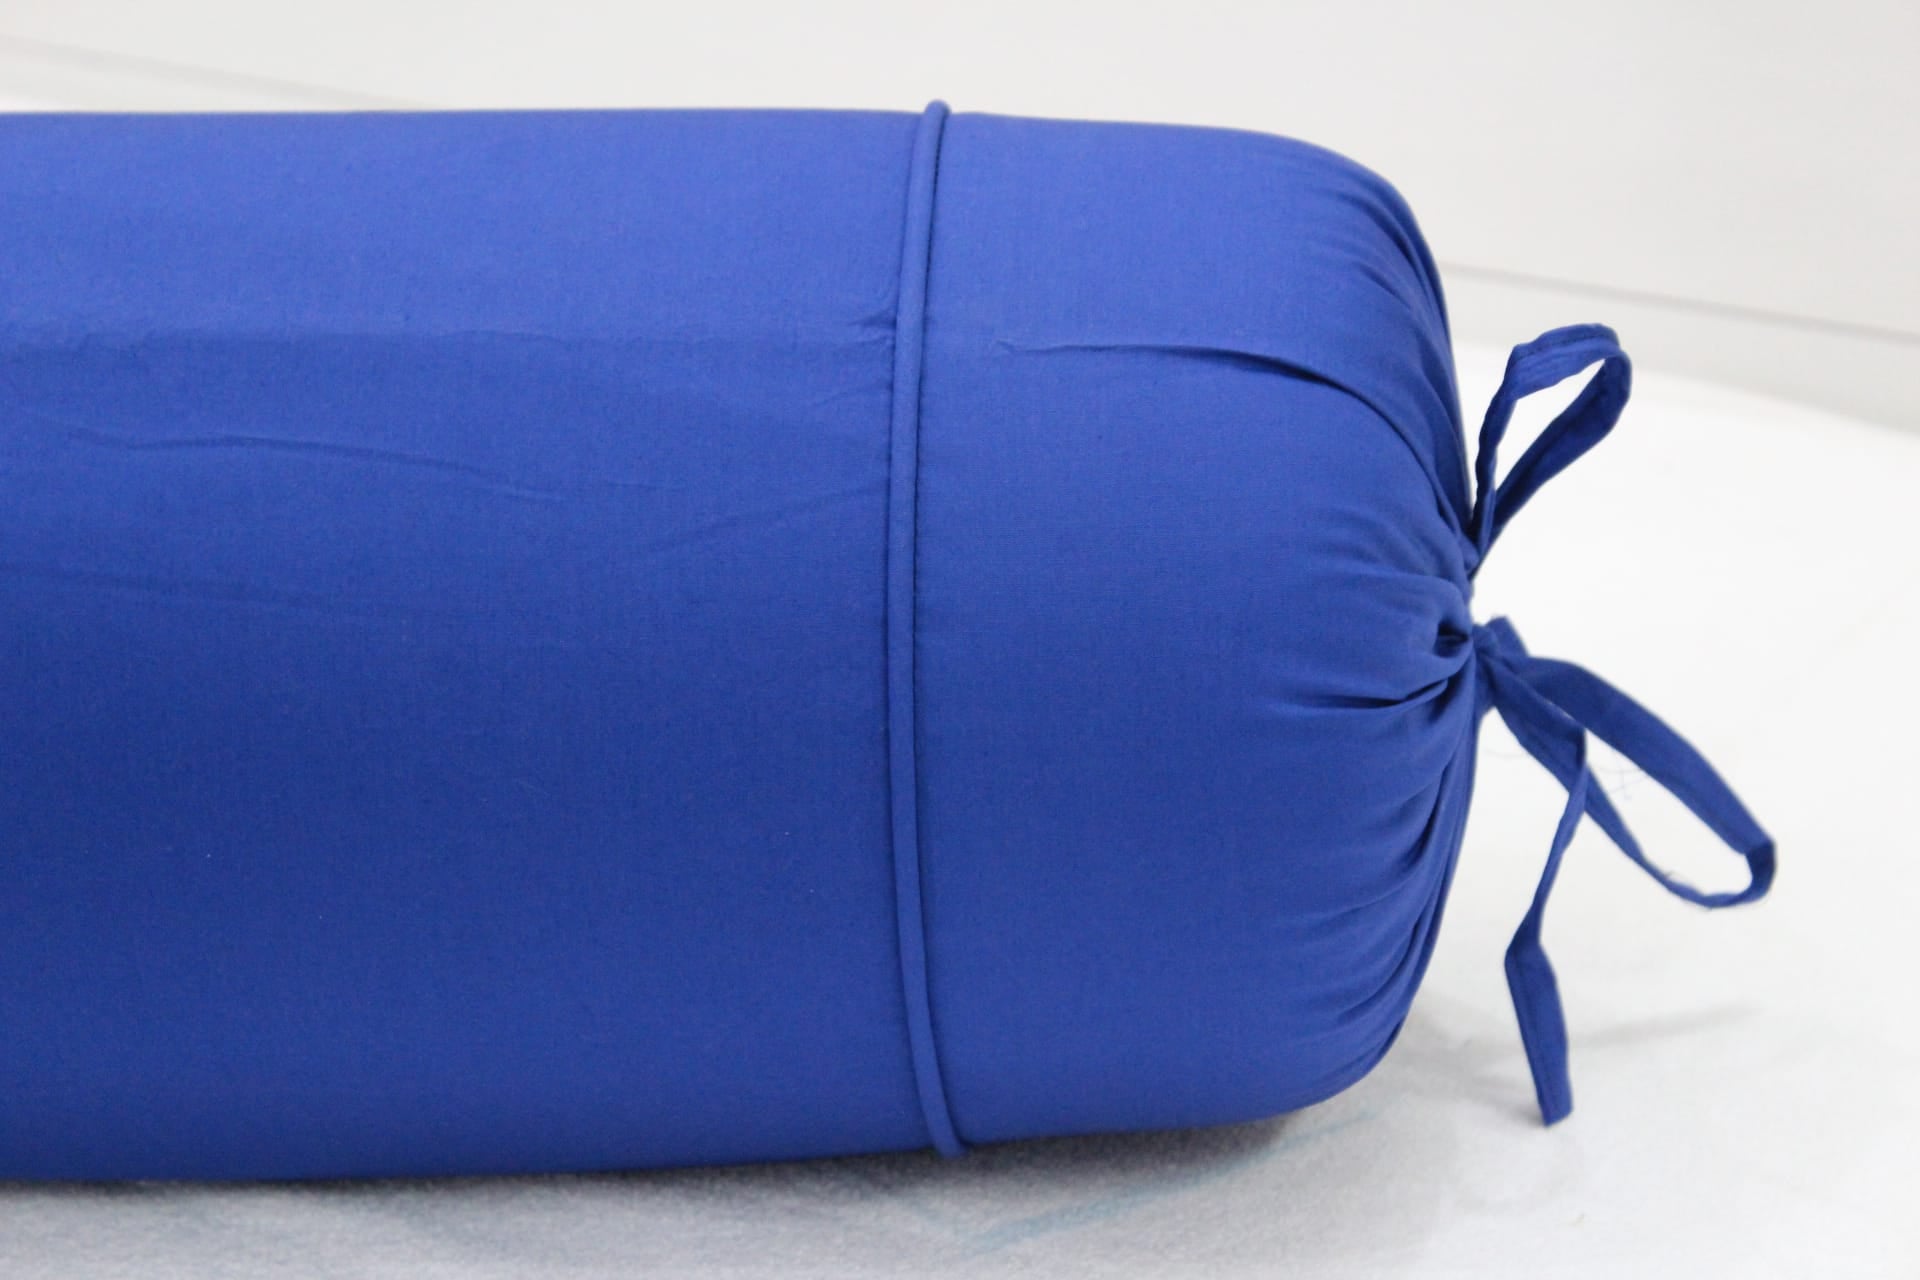 Soft Plain Cotton Bolster Cover Set in Marine Blue online - 2Pcs